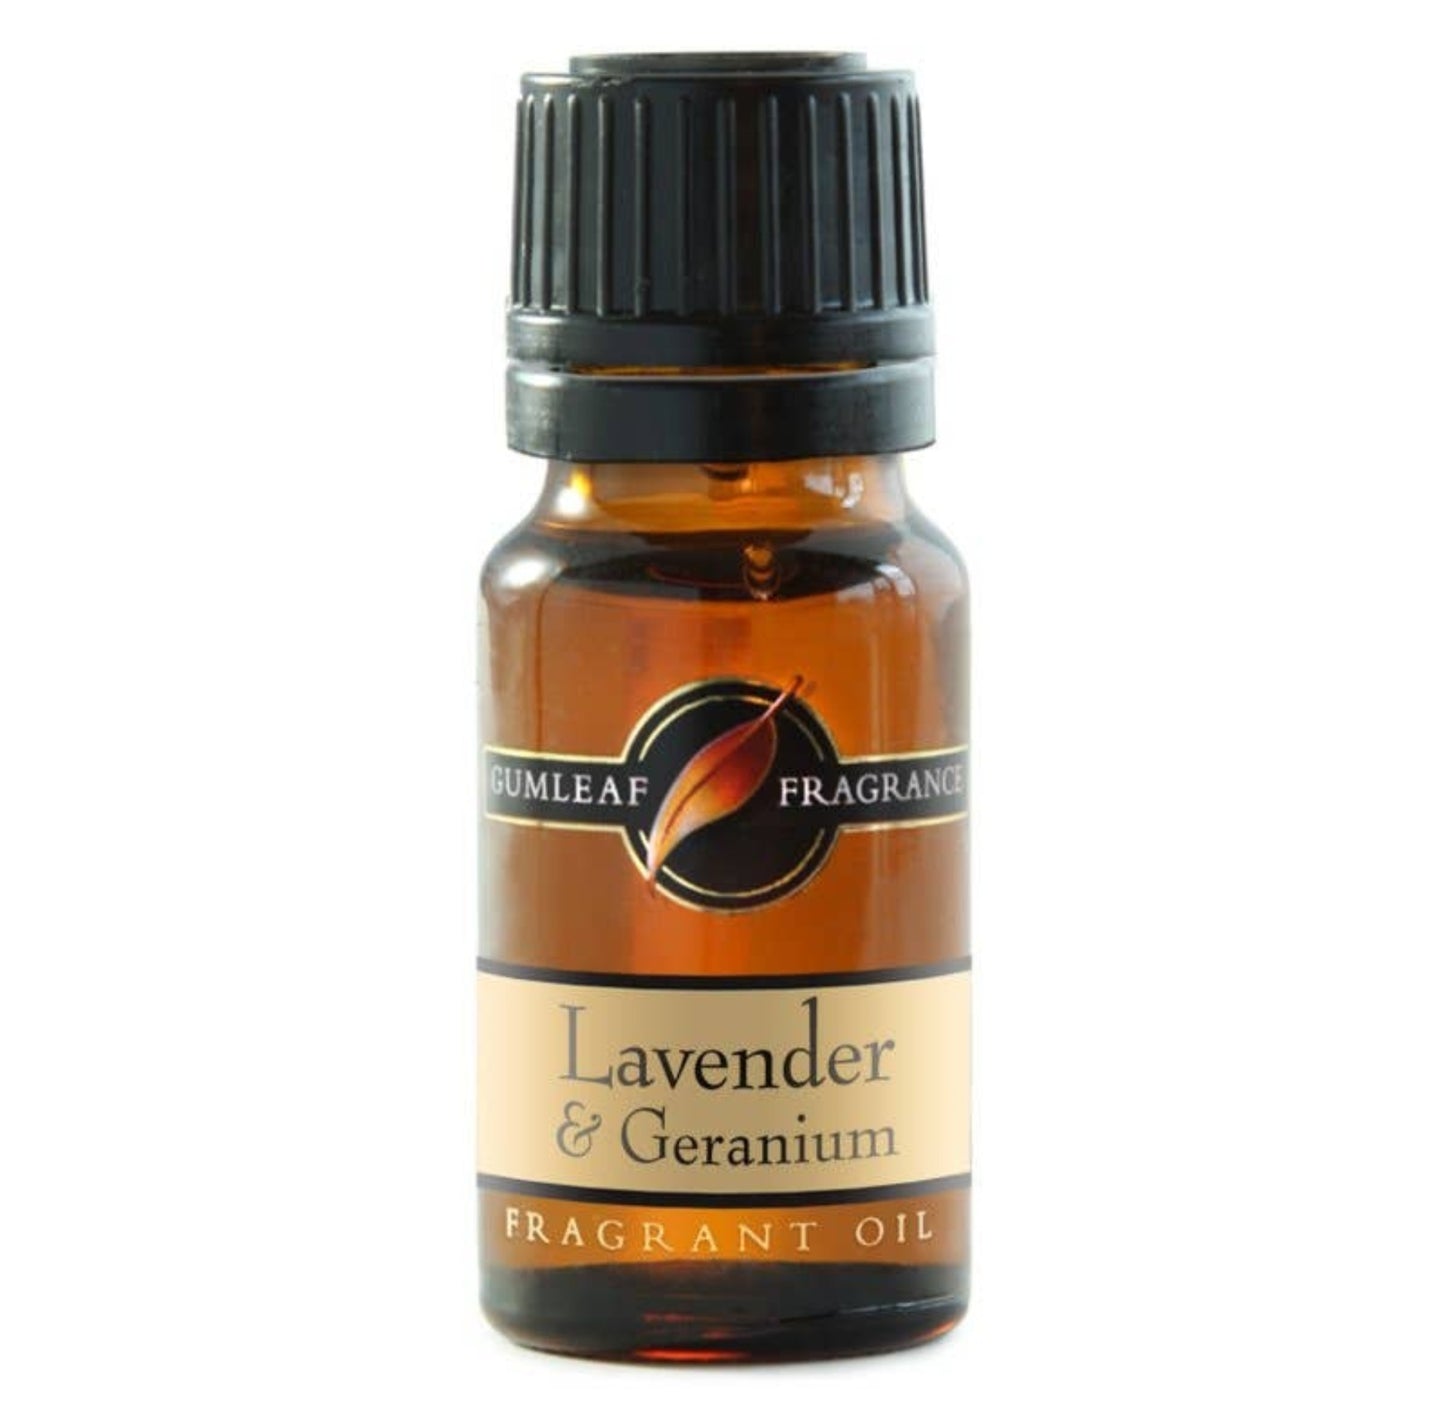 Lavender & Geranium Fragrance Oil